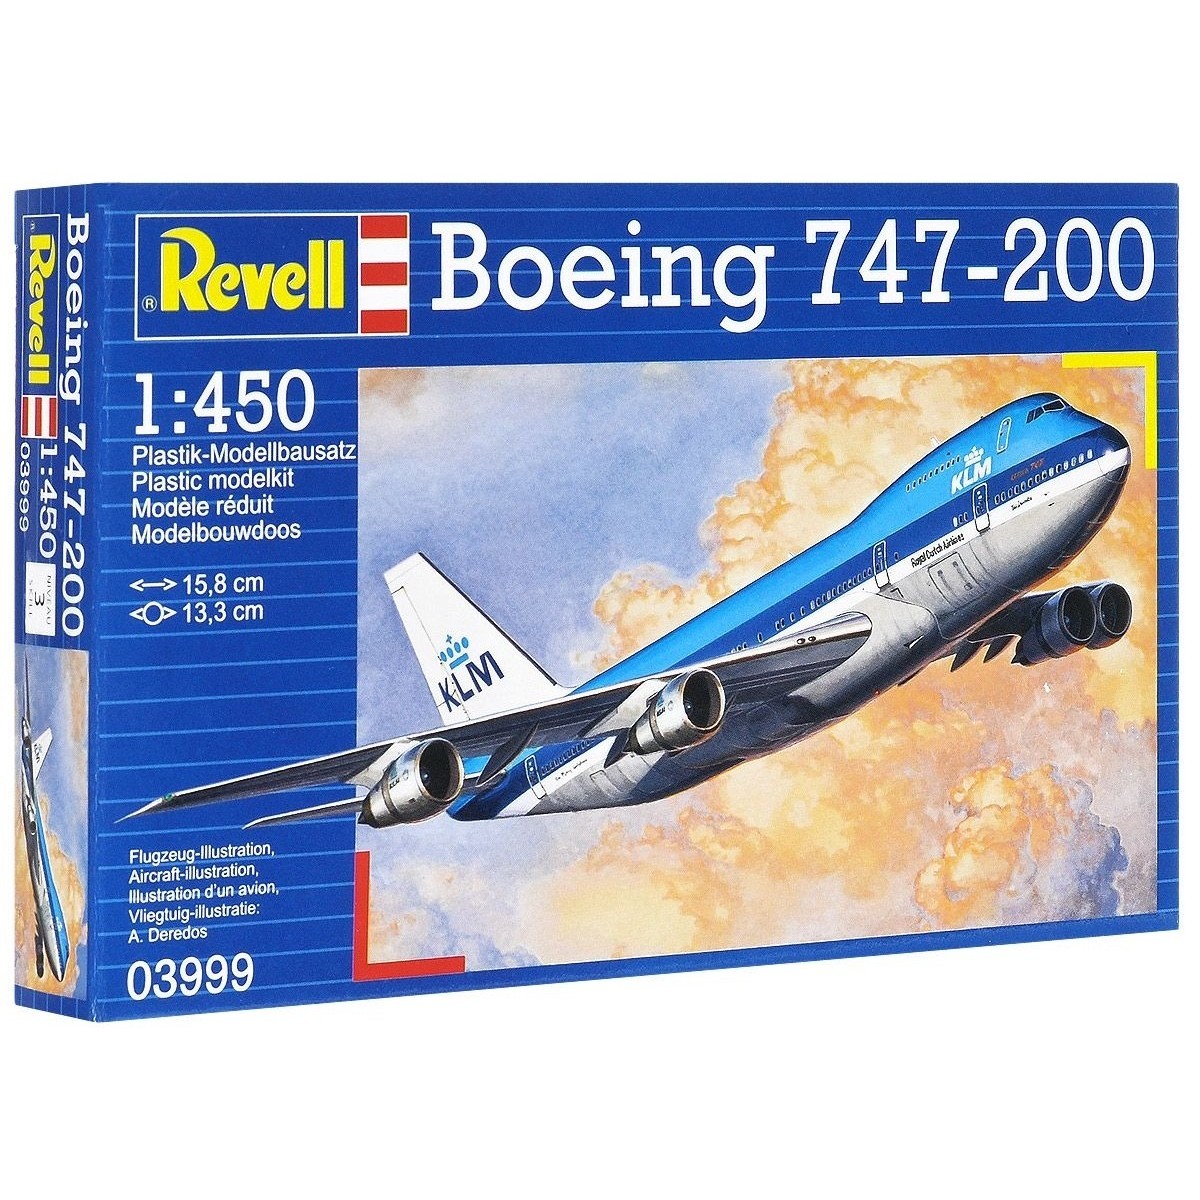 Сборная модель Revell Boeing 747-200 (1:450) .